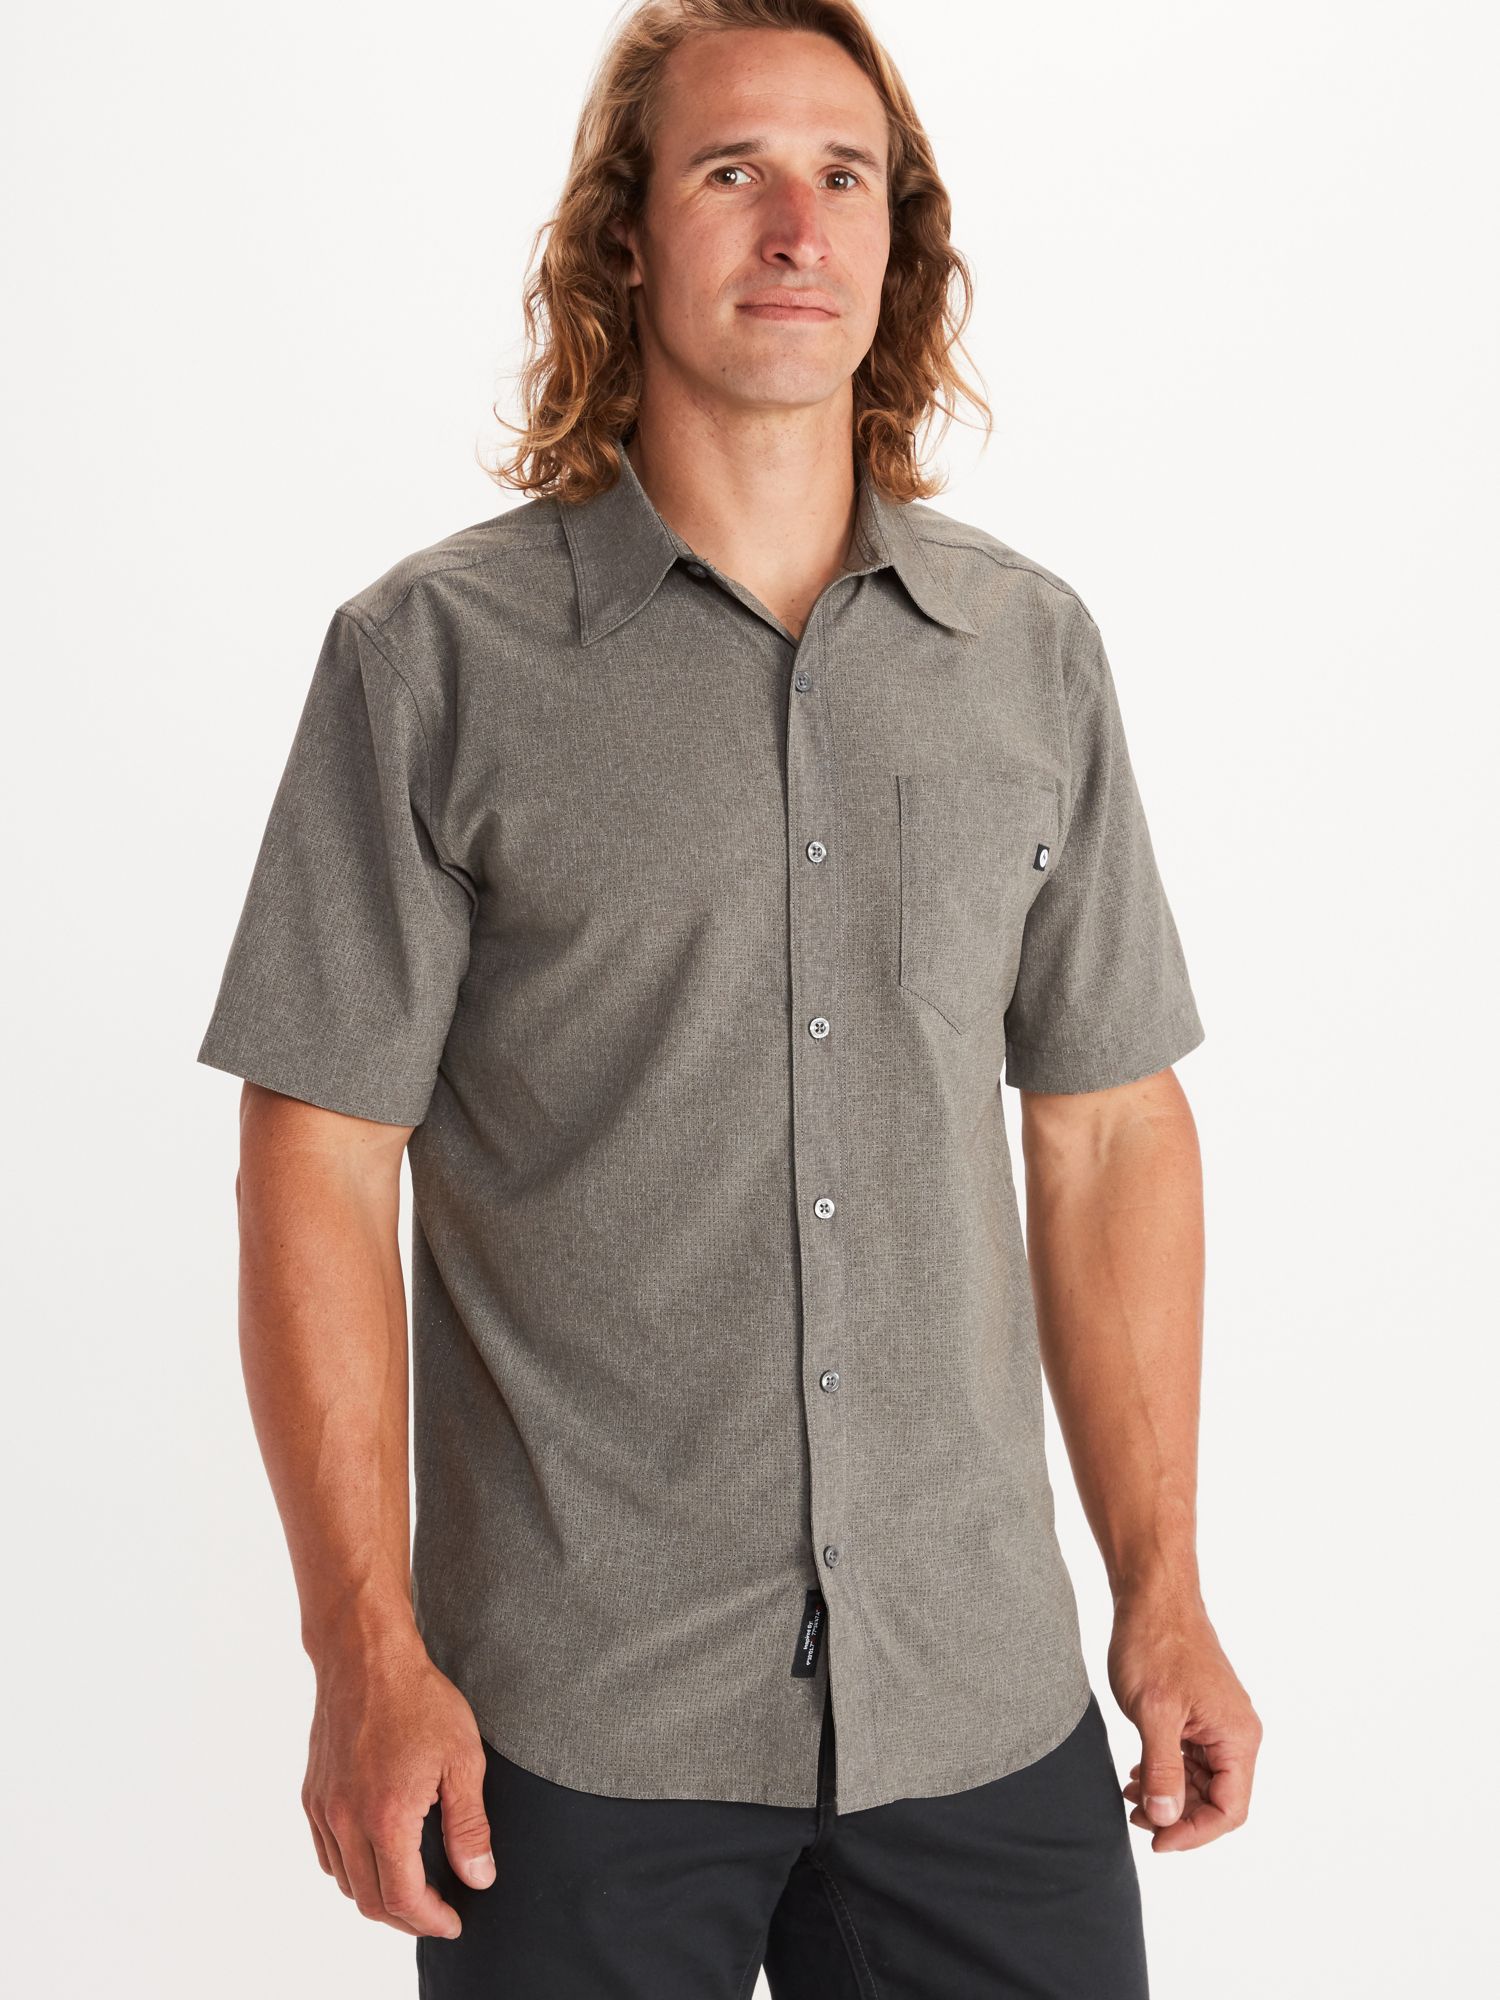 Men's Aerobora Short-Sleeve Shirt - Big & Tall